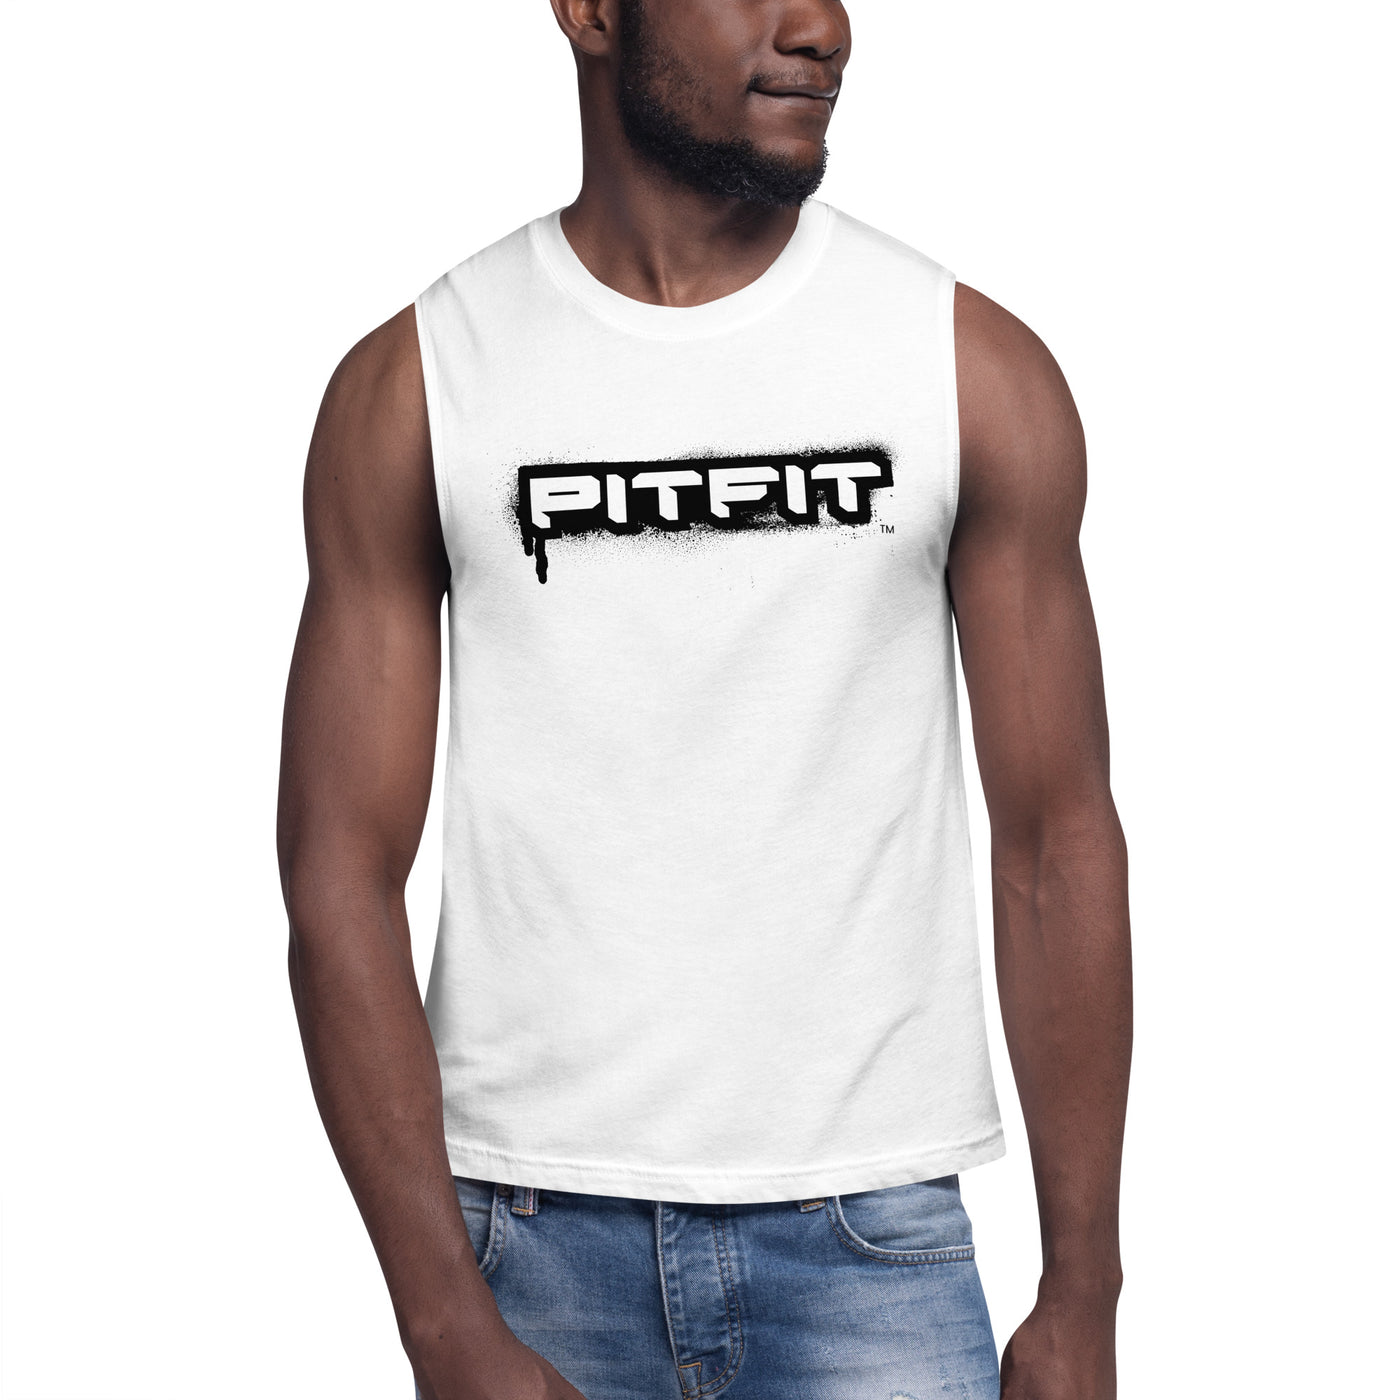 PITFIT White Muscle Shirt